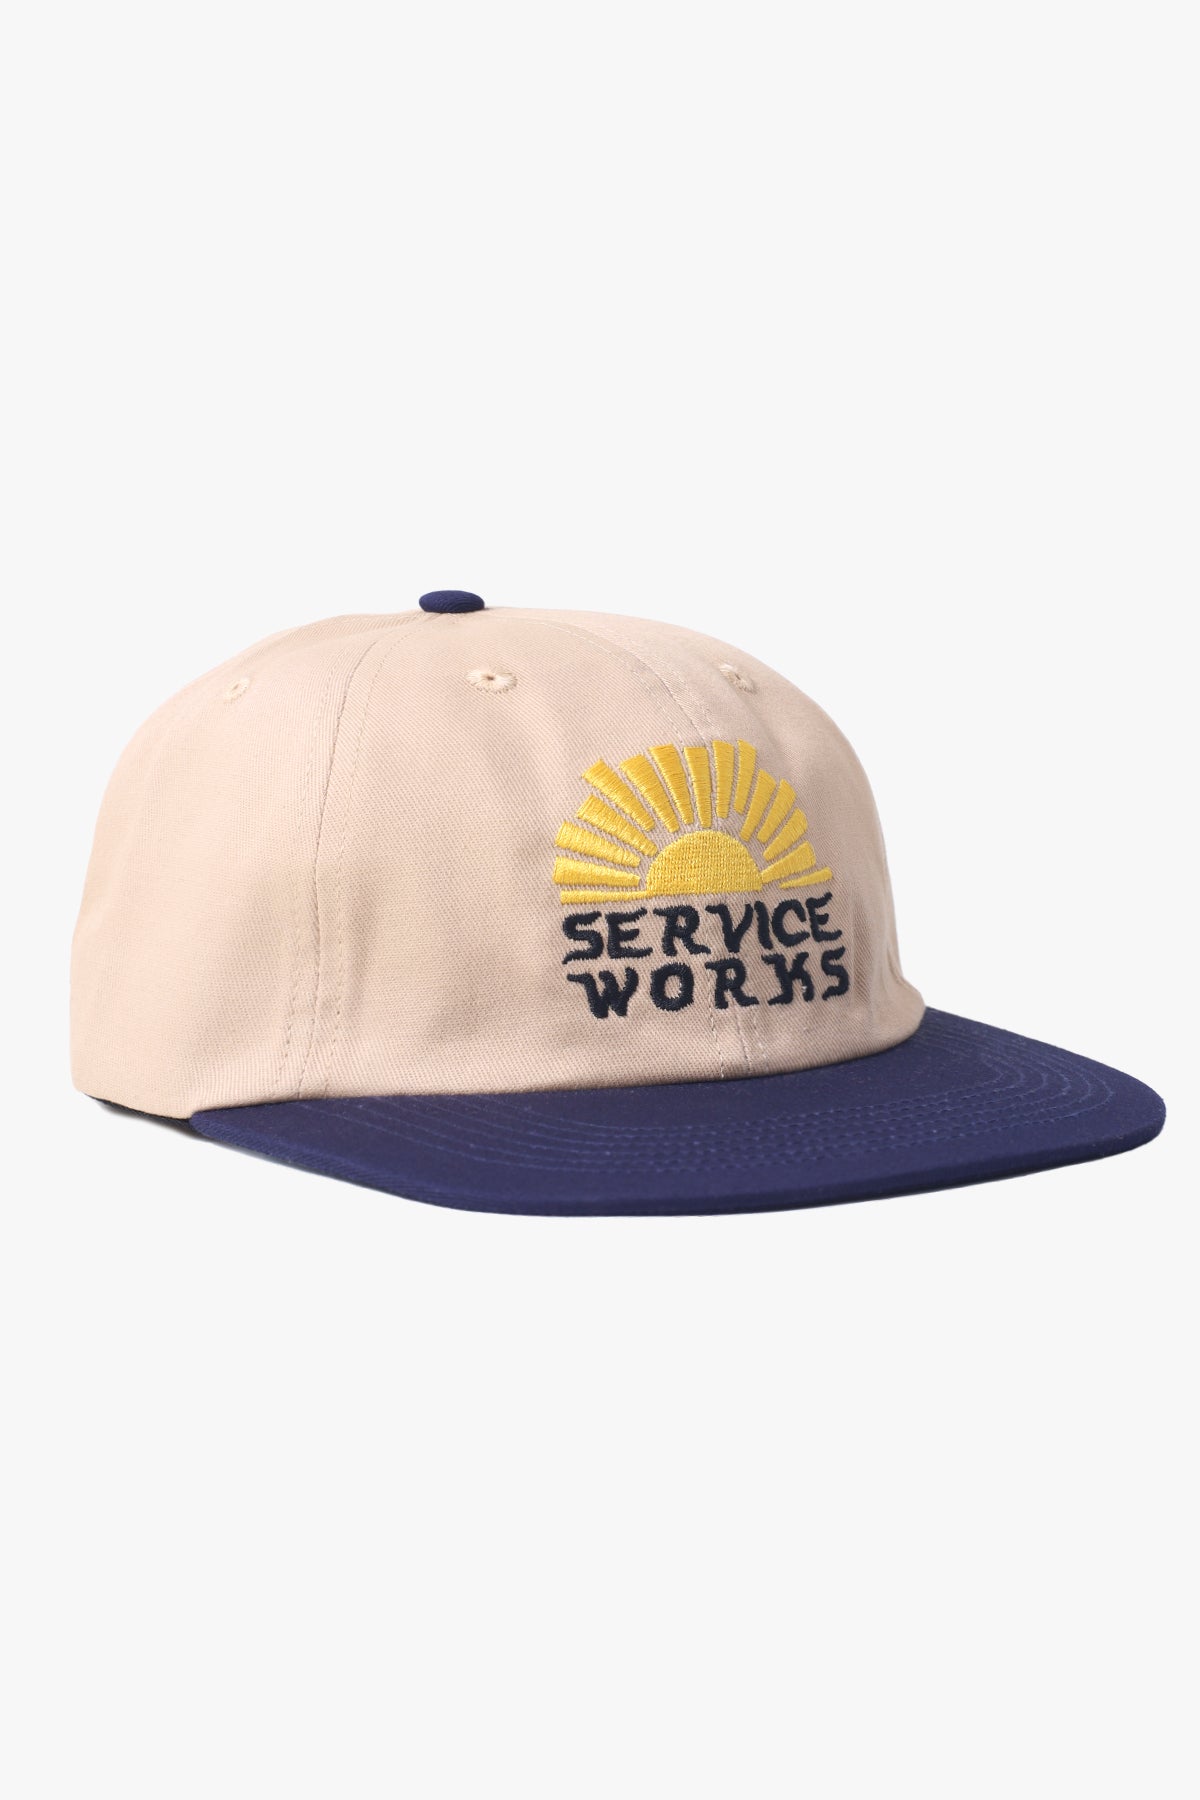 Service Works Sunnyside Up Cap